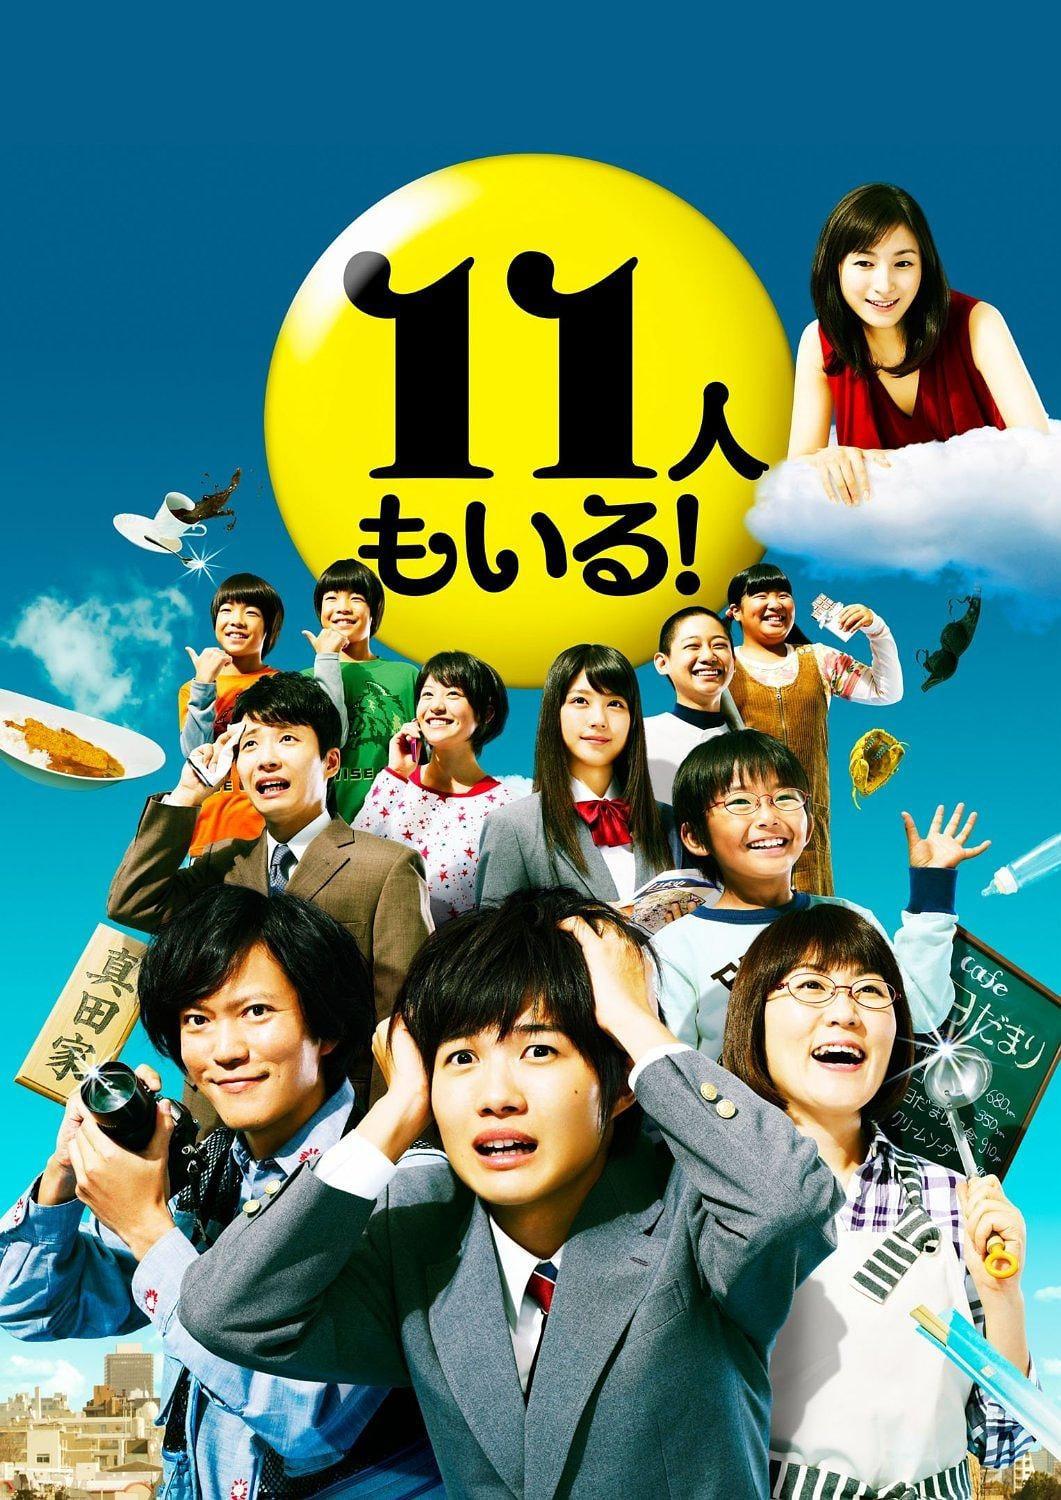 TV ratings for Odd Family 11 (11人もいる!) in Alemania. TV Asahi TV series